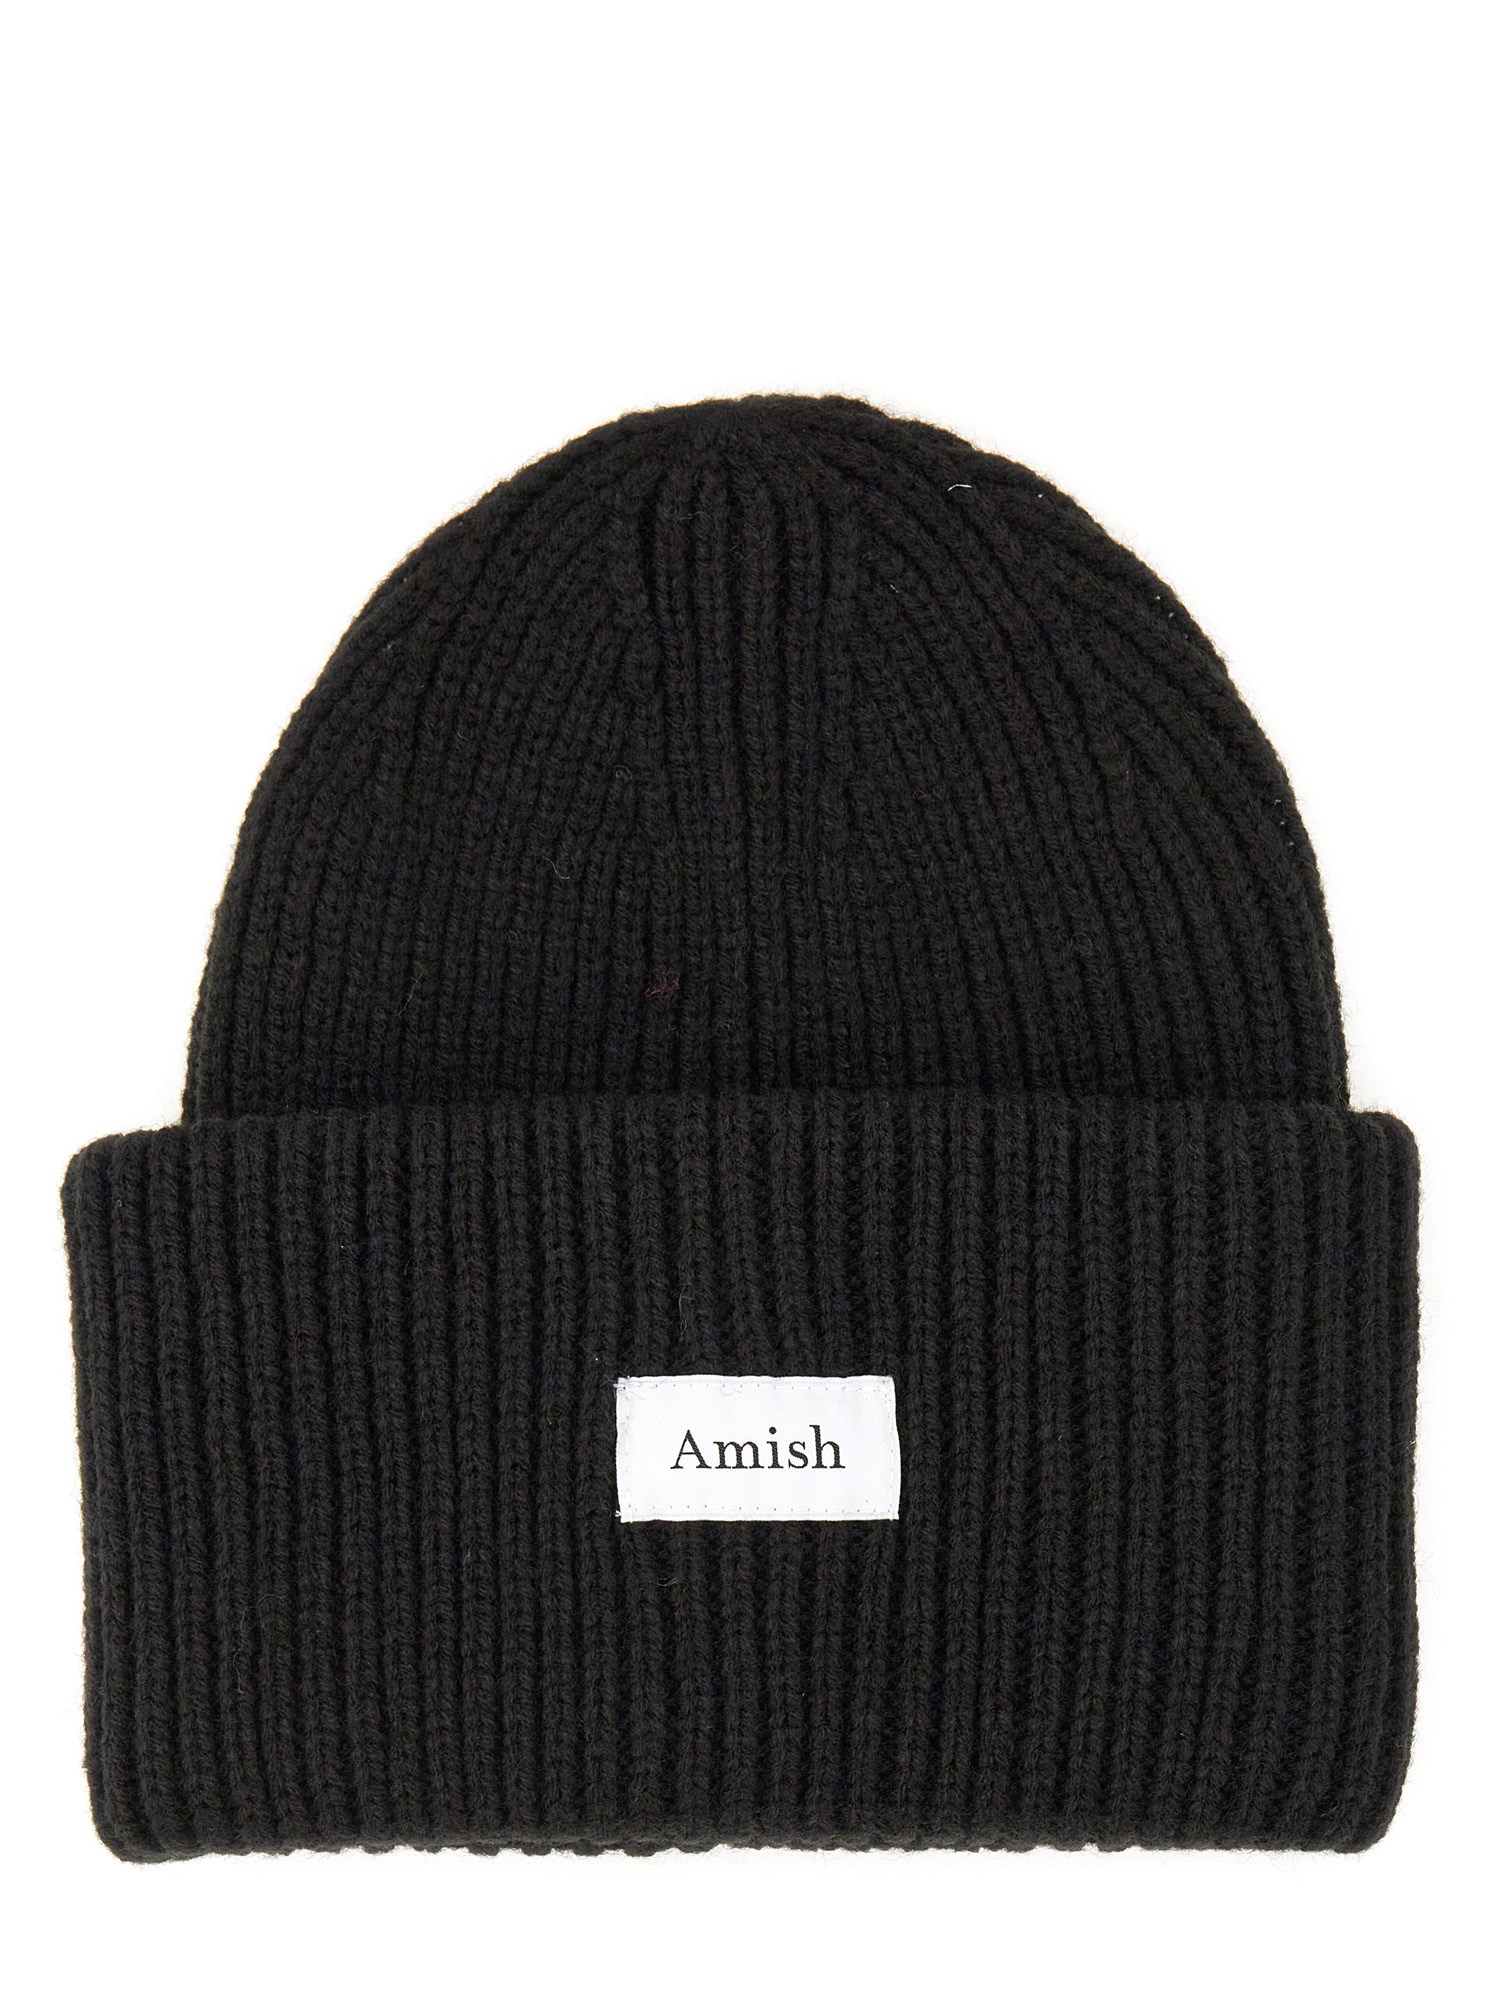 Amish amish beanie hat with logo